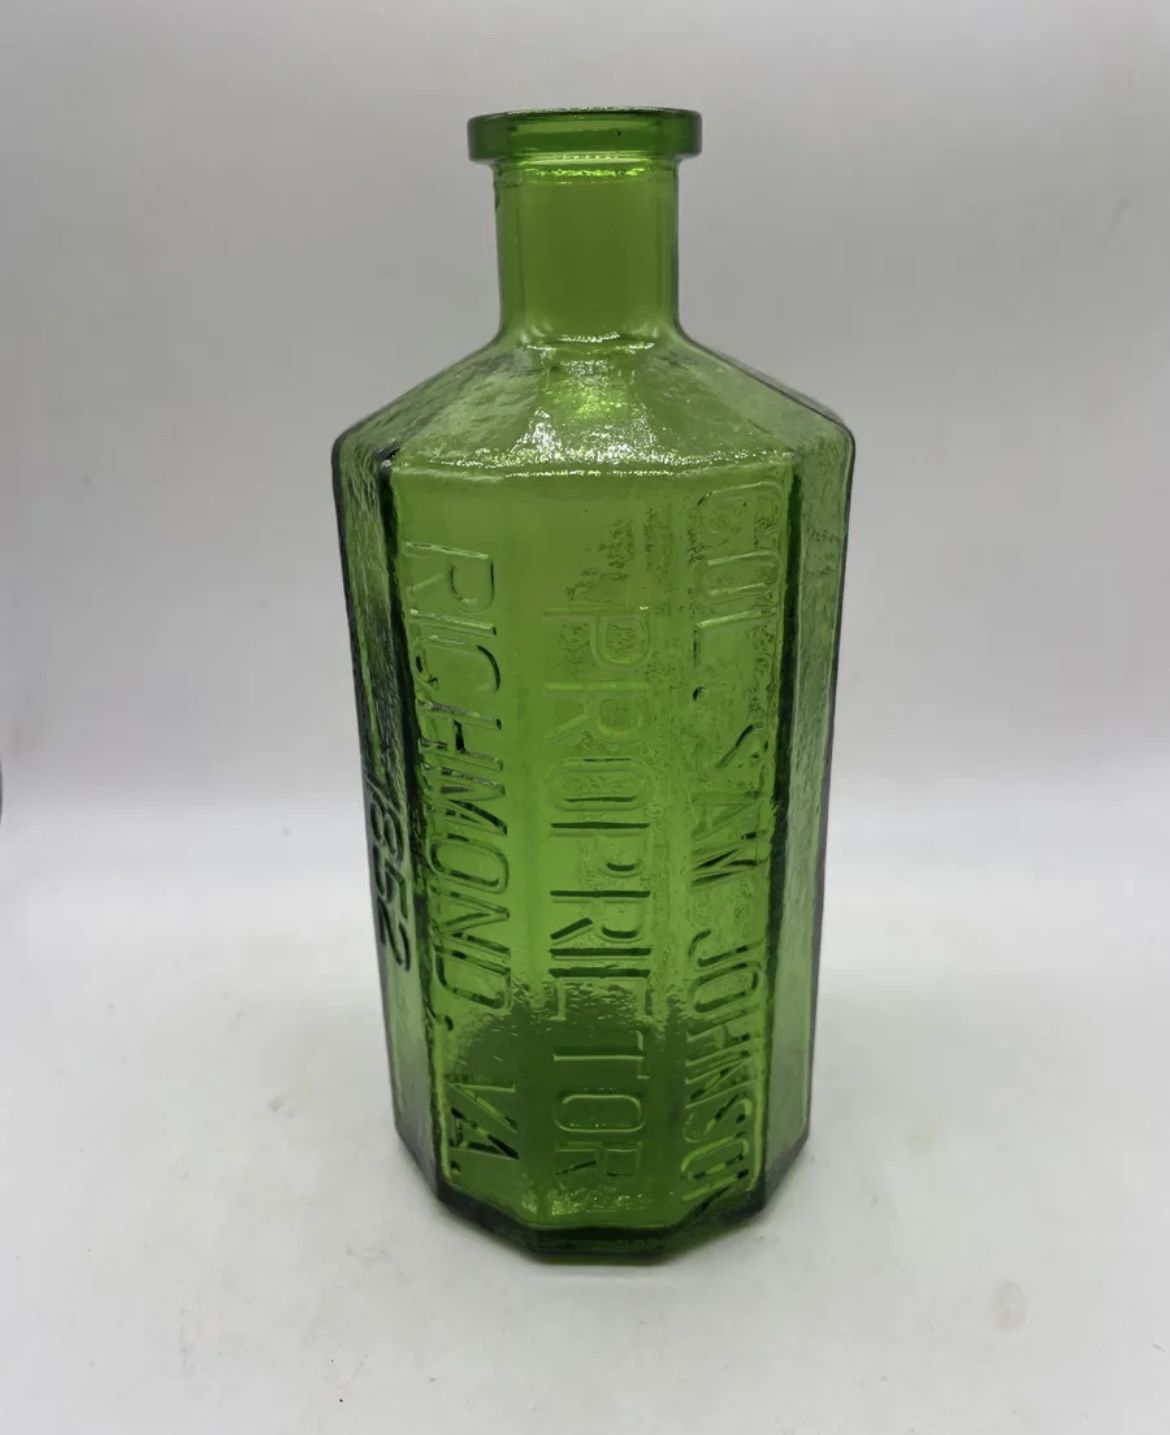 Antique A. Lancaster's Indian Vegetable Jaundice Bitters Bottle 1852 Green 